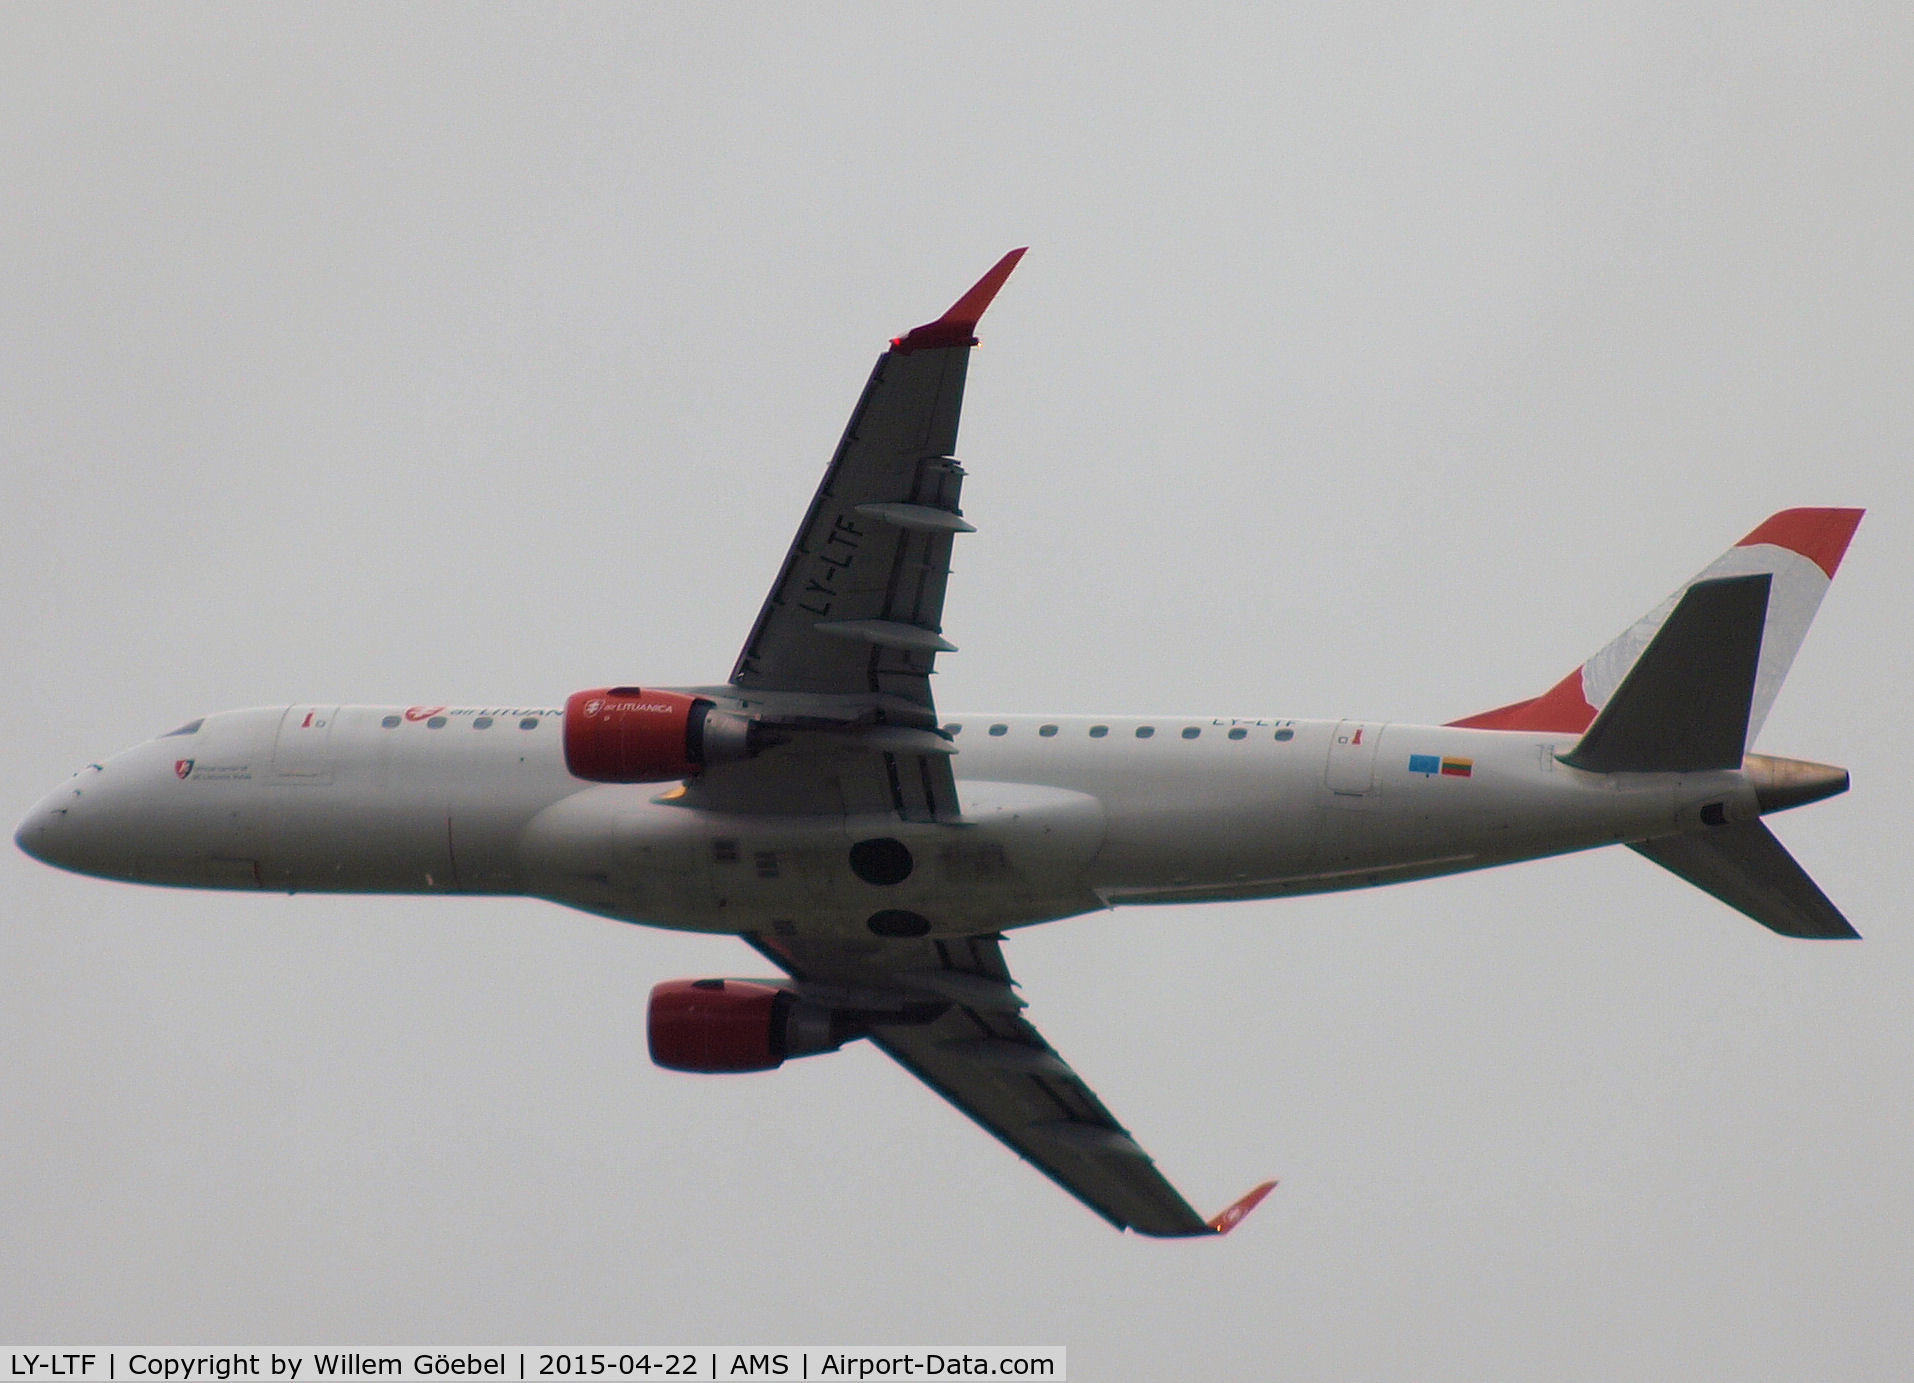 LY-LTF, 2003 Embraer 175LR (ERJ-170-200LR) C/N 17000017, Take off from runway36C of Schiphol Airport